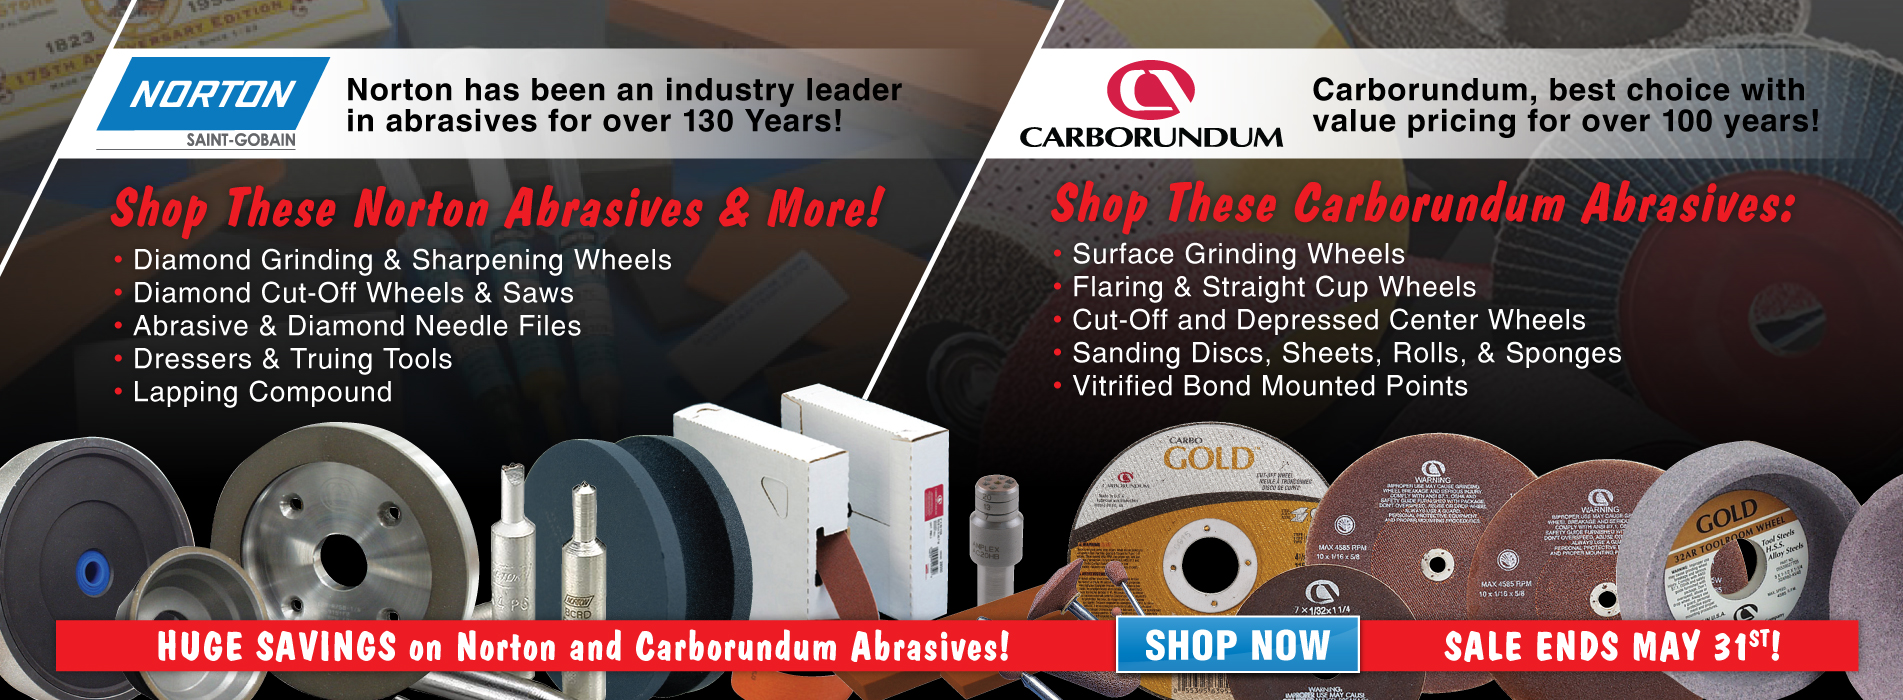 Save on Carborundum and Norton Abrasives